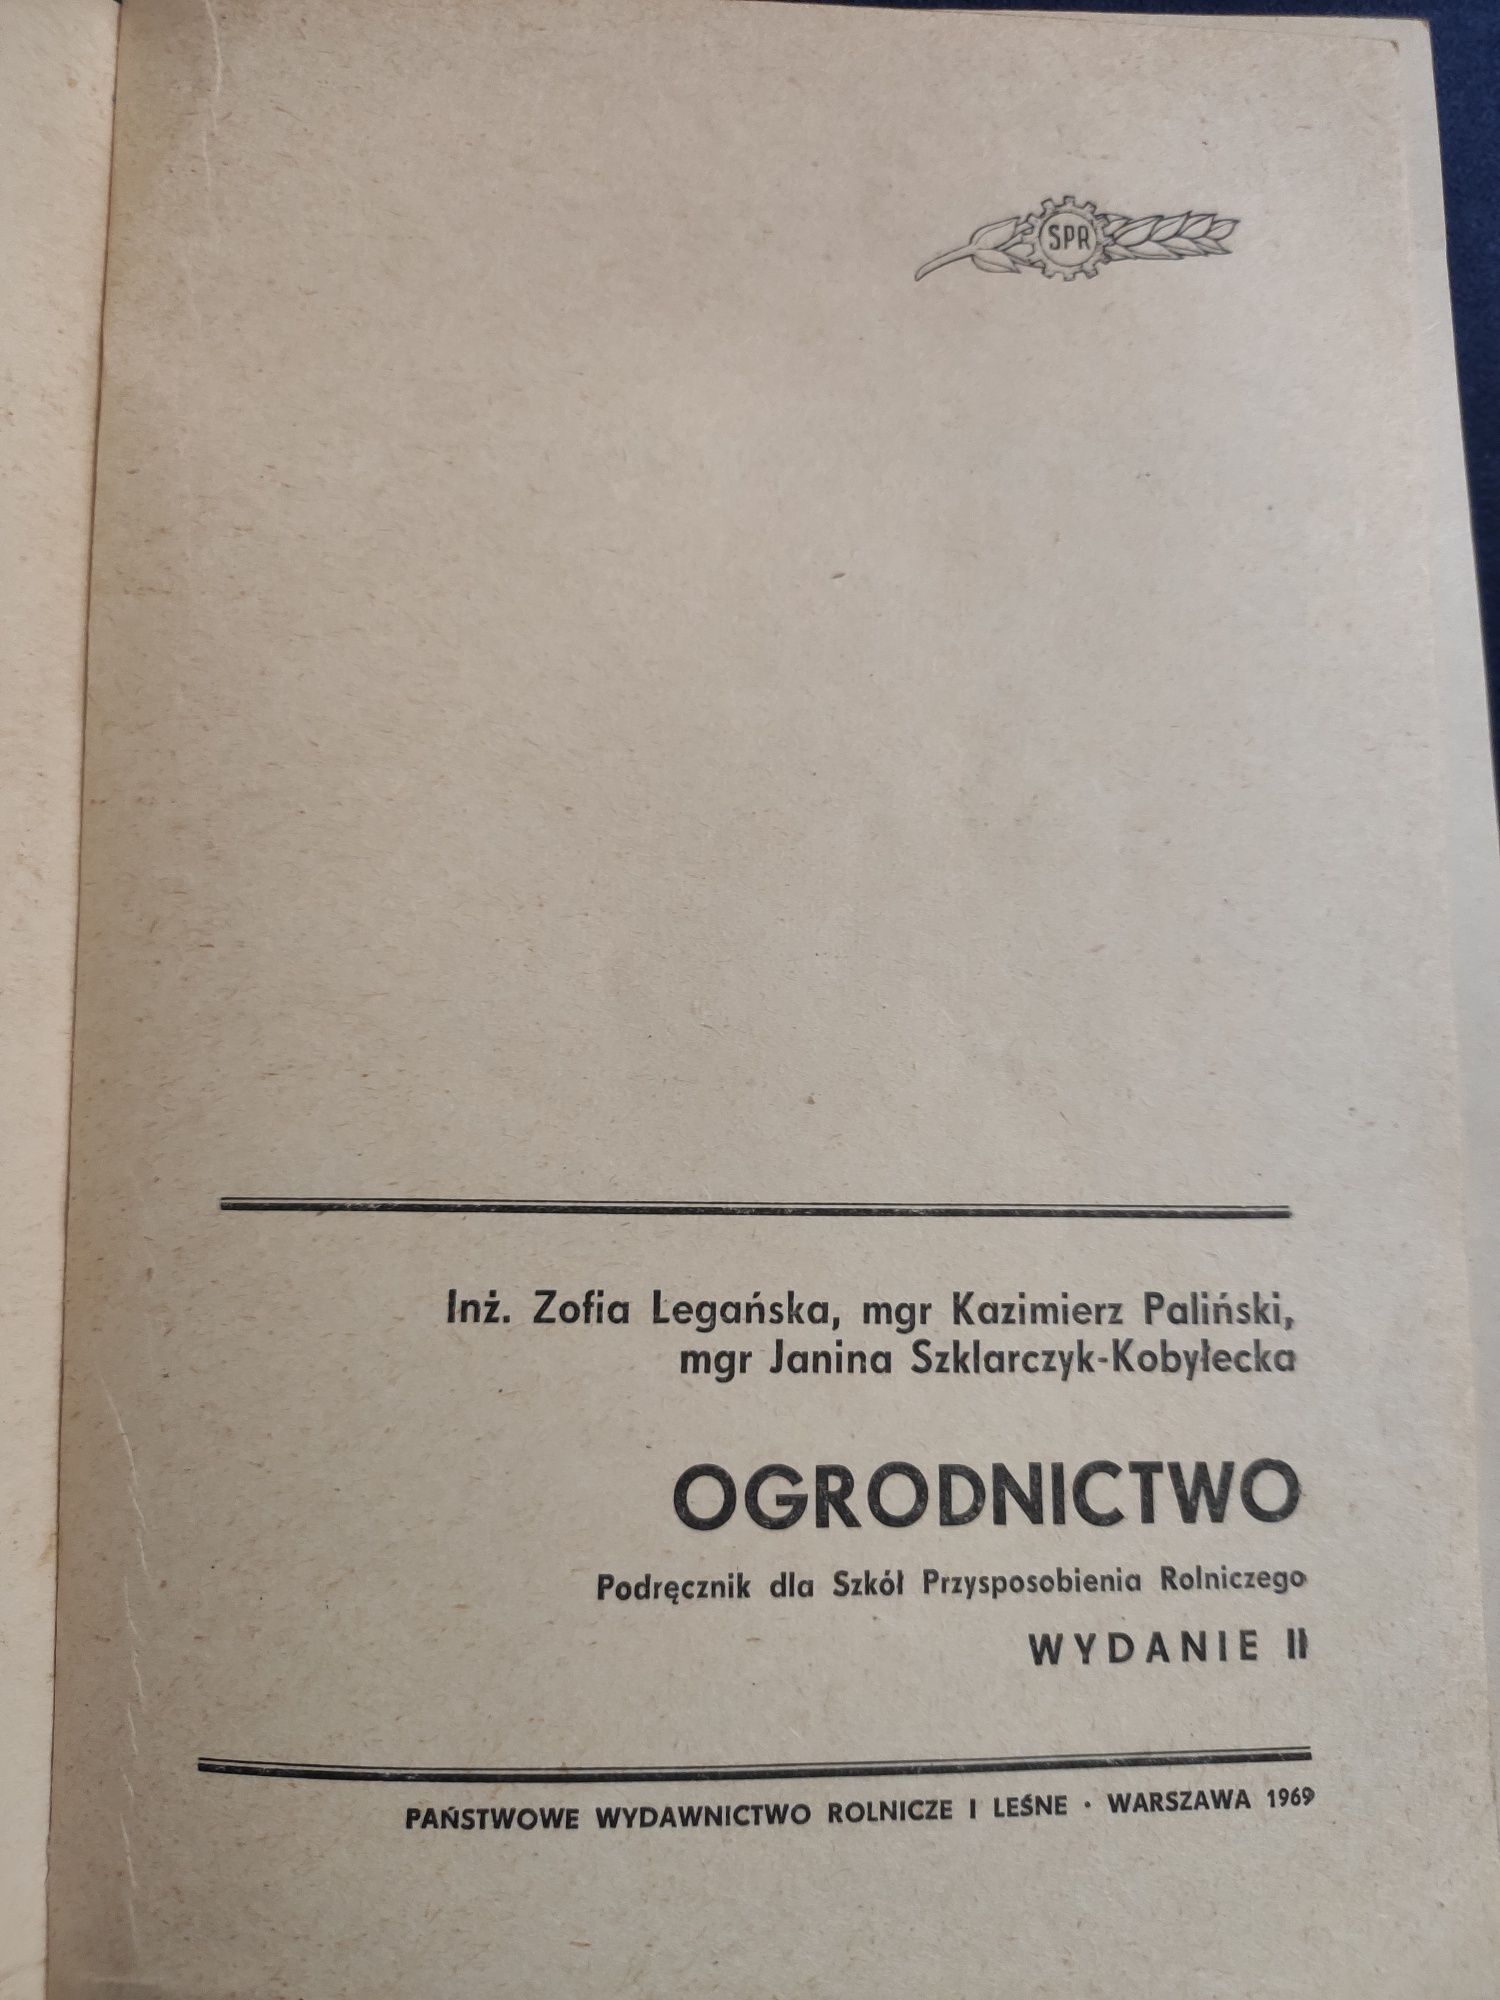 Książka  ,,Ogrodnictwo" Zofia Legańska